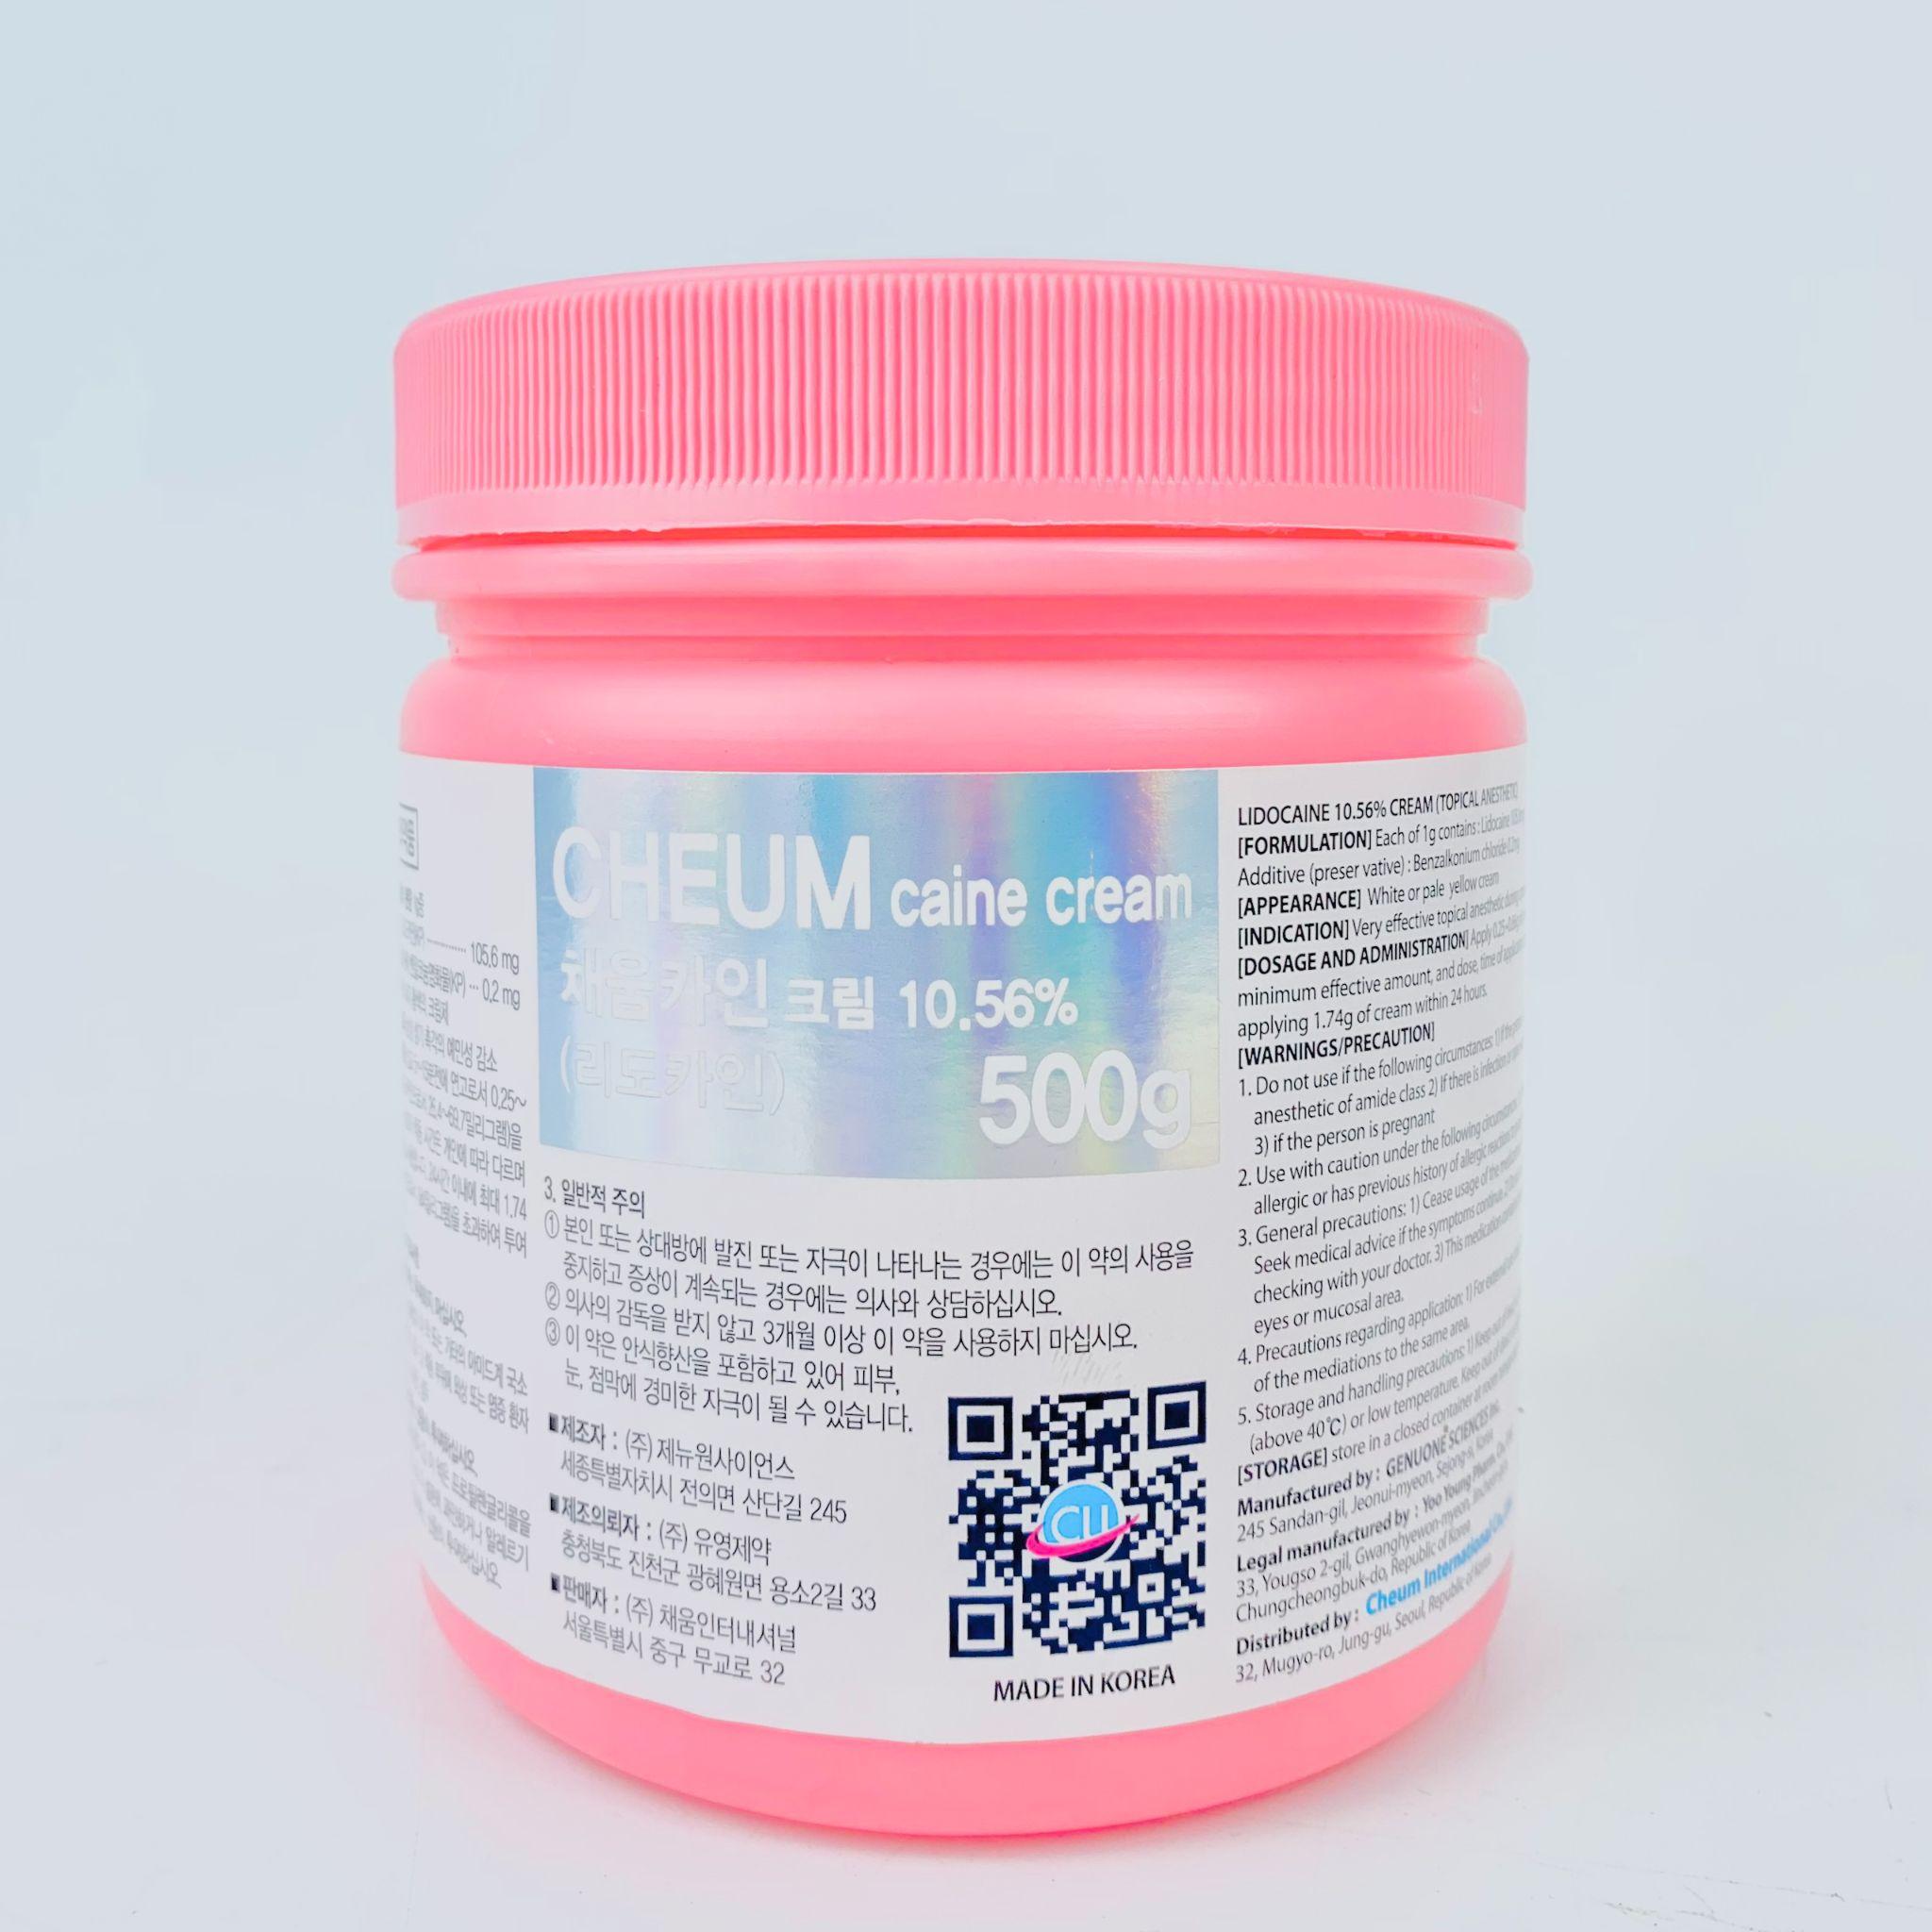 Kem ủ tê Cheum Caine Cream Lidocaine 10.56% Hàn Quốc